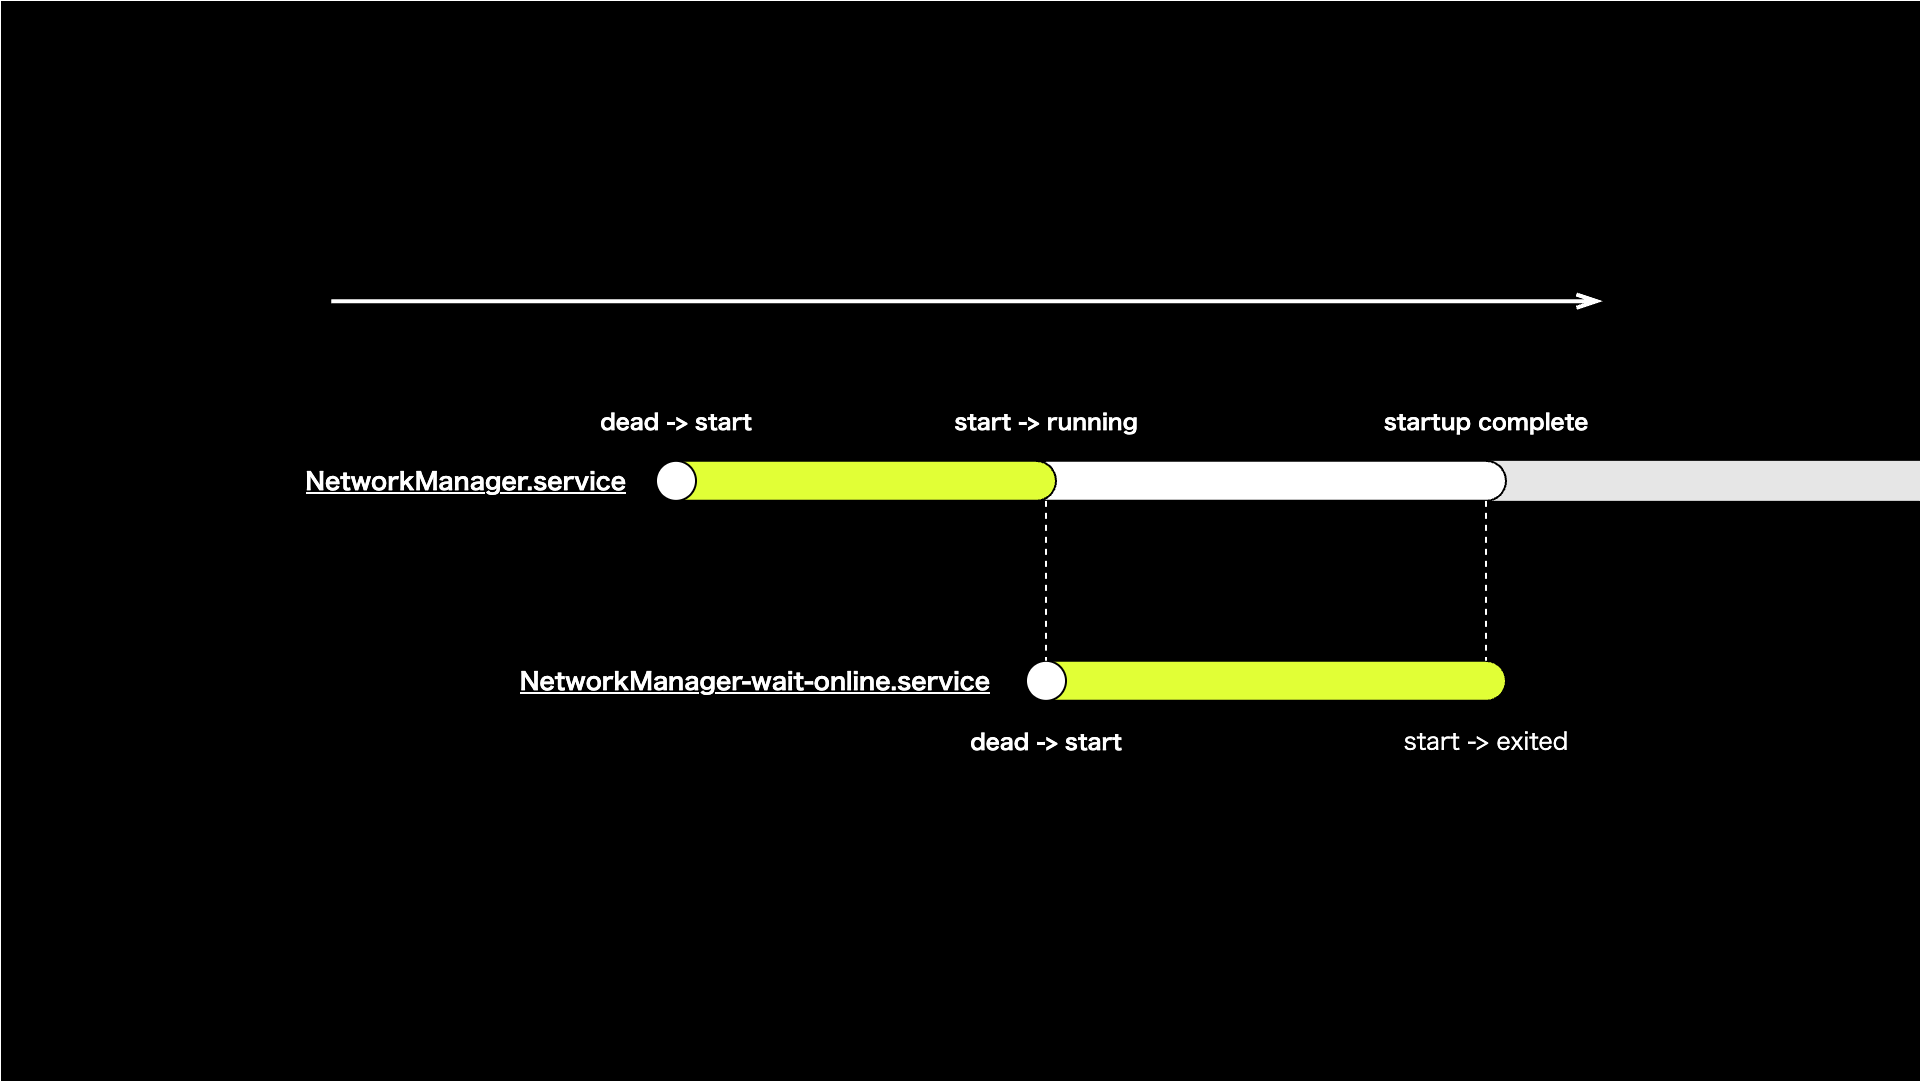 NetworkManager.serviceとNetworkManager-wait-online.service